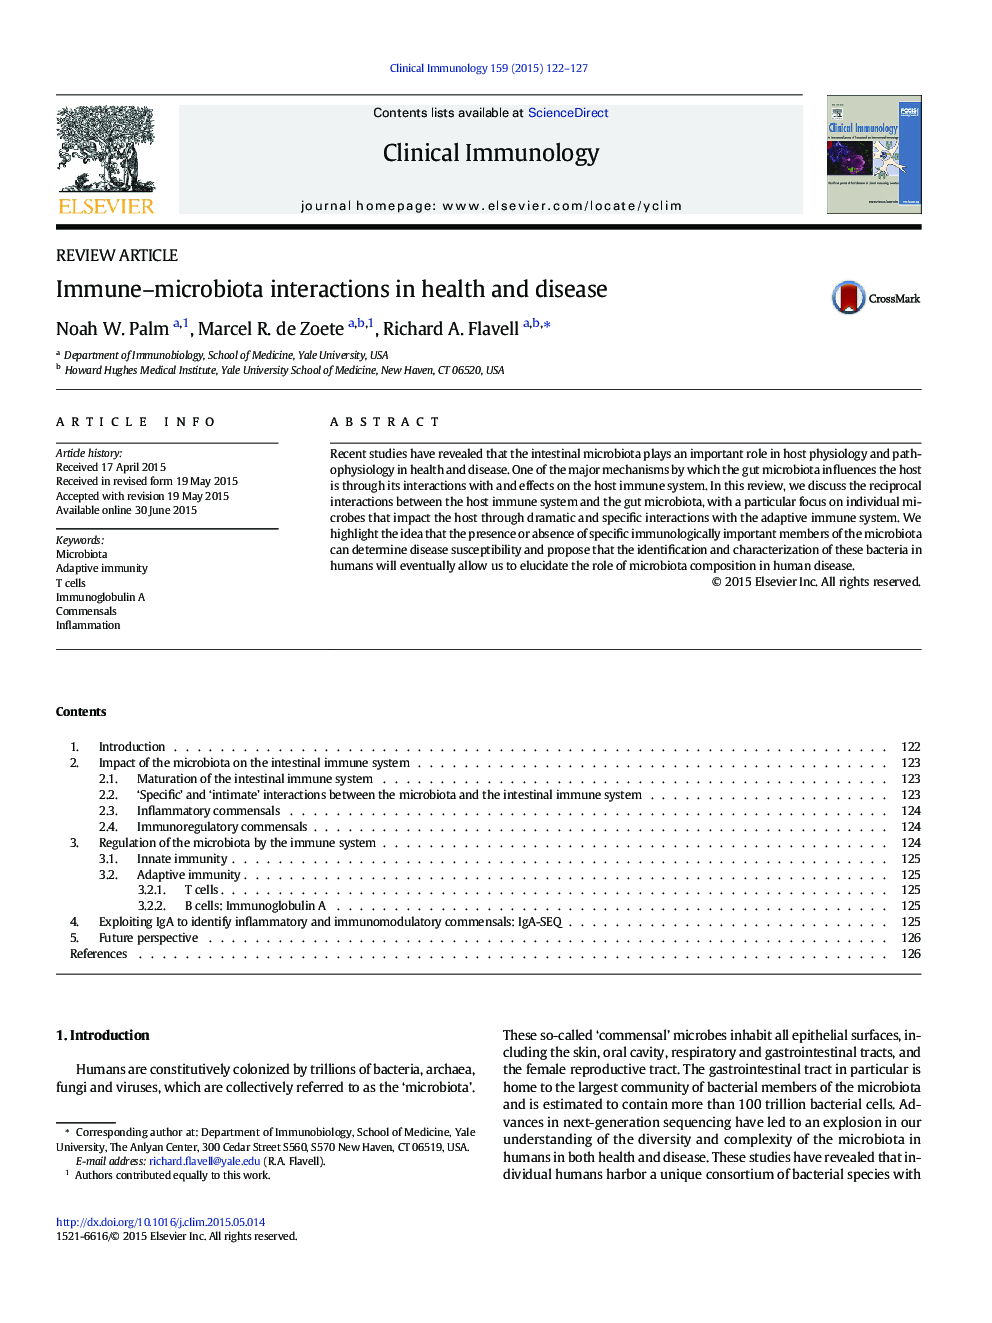 REVIEW ARTICLEImmune-microbiota interactions in health and disease